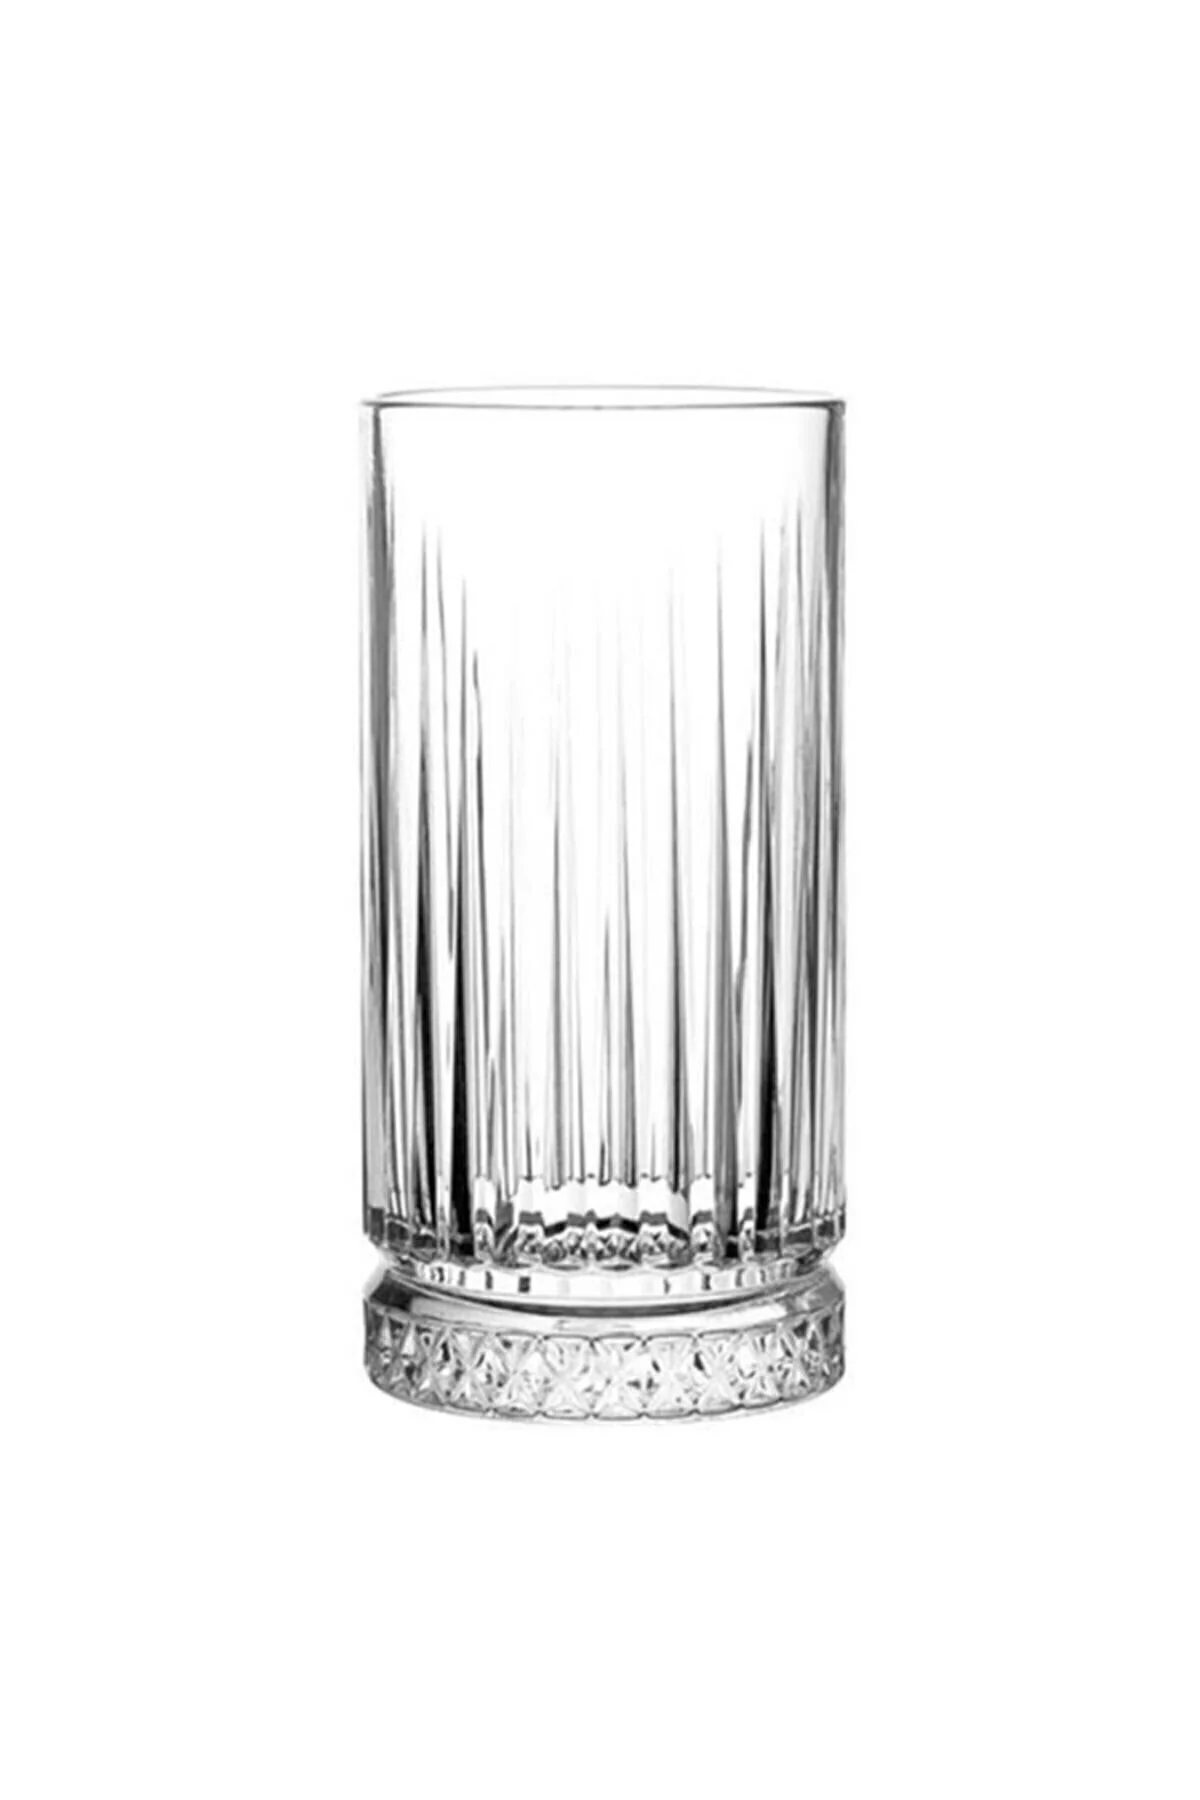 Long drink glass